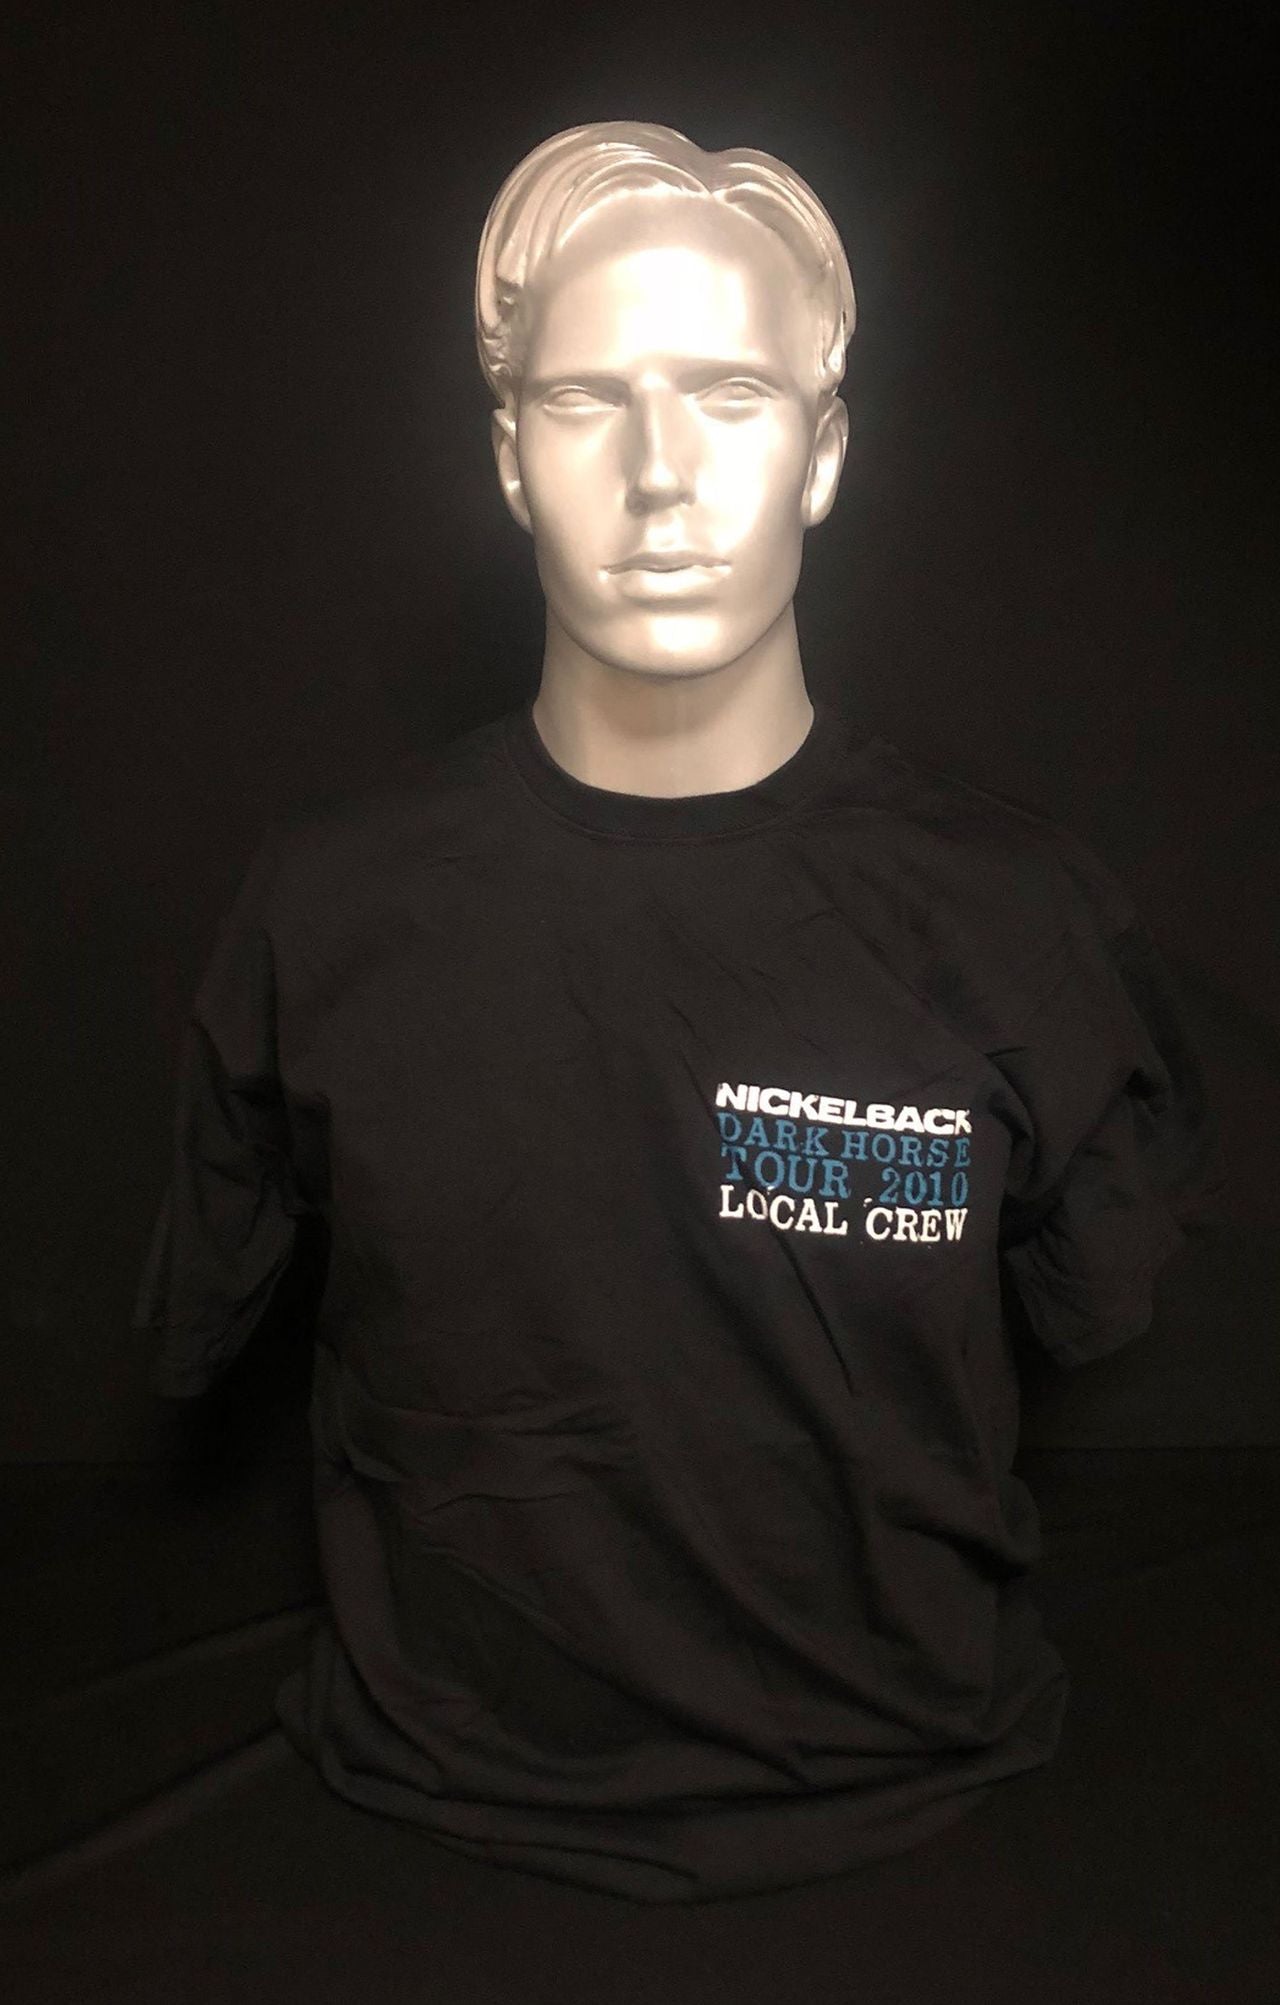 Nickelback Dark Horse Tour 2010 - Local Crew UK Promo t-shirt CREW T-SHIRT